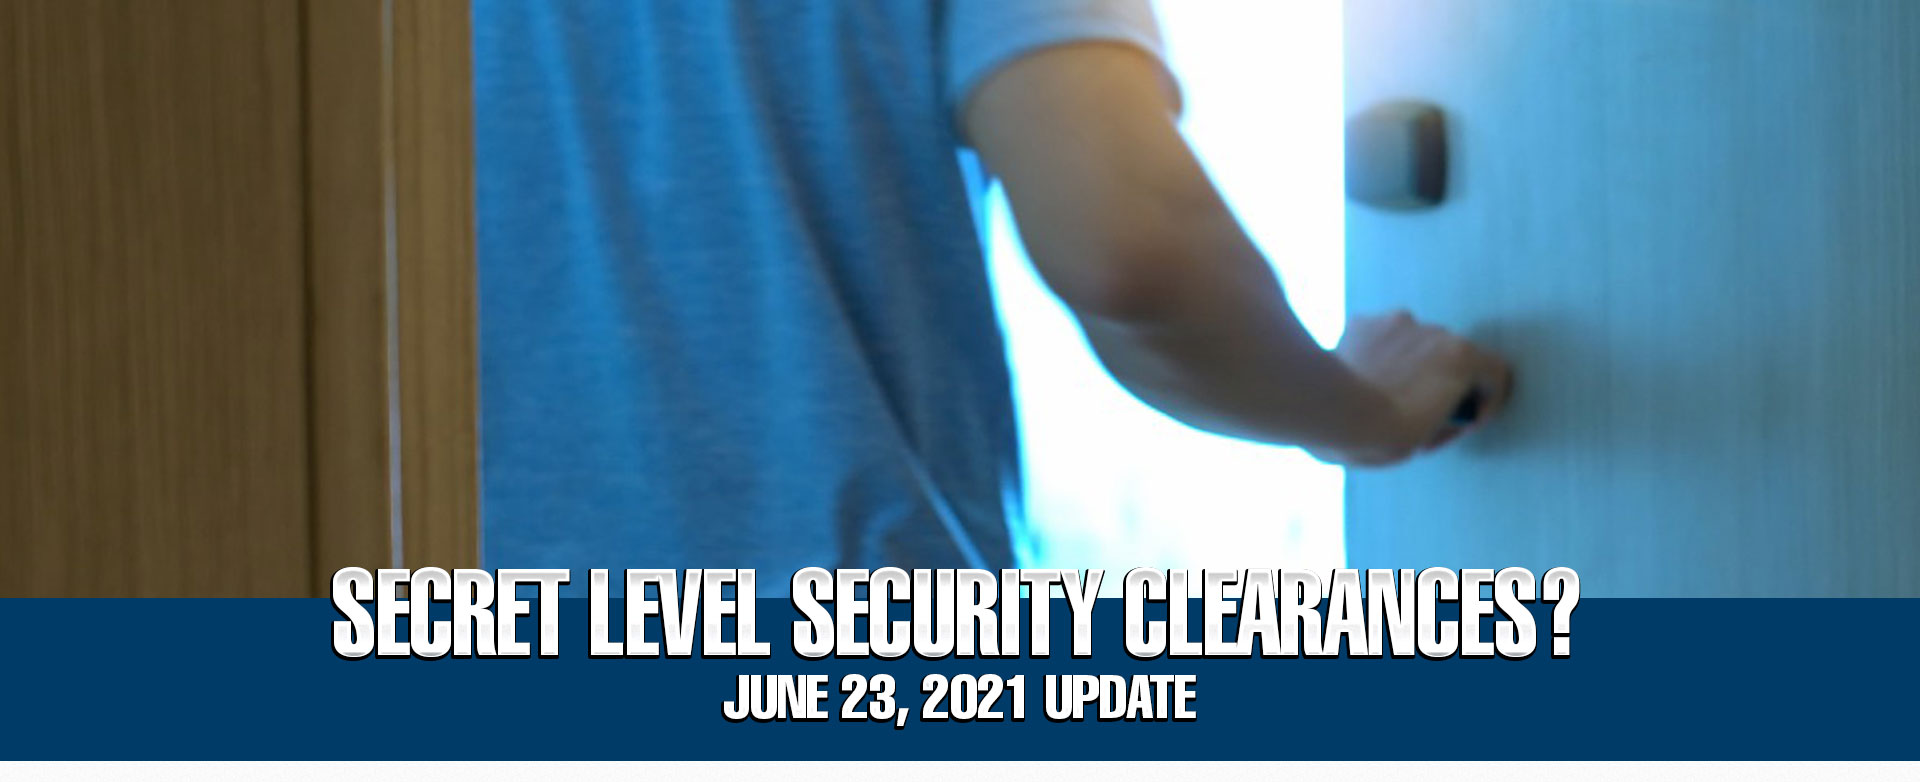 MyPatriotsNetwork-Secret Level Security Clearances?- June 23, 2021 Update